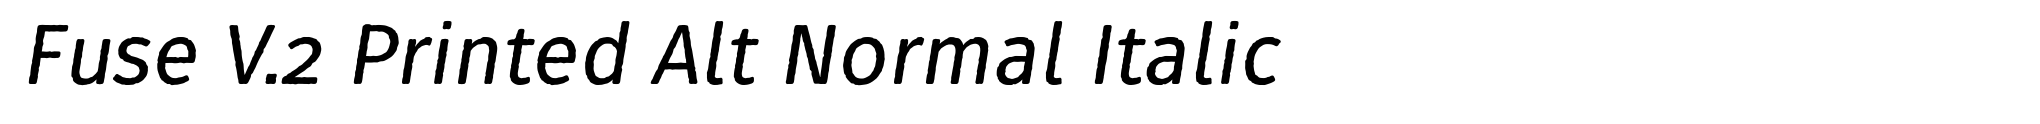 Fuse V.2 Printed Alt Normal Italic image